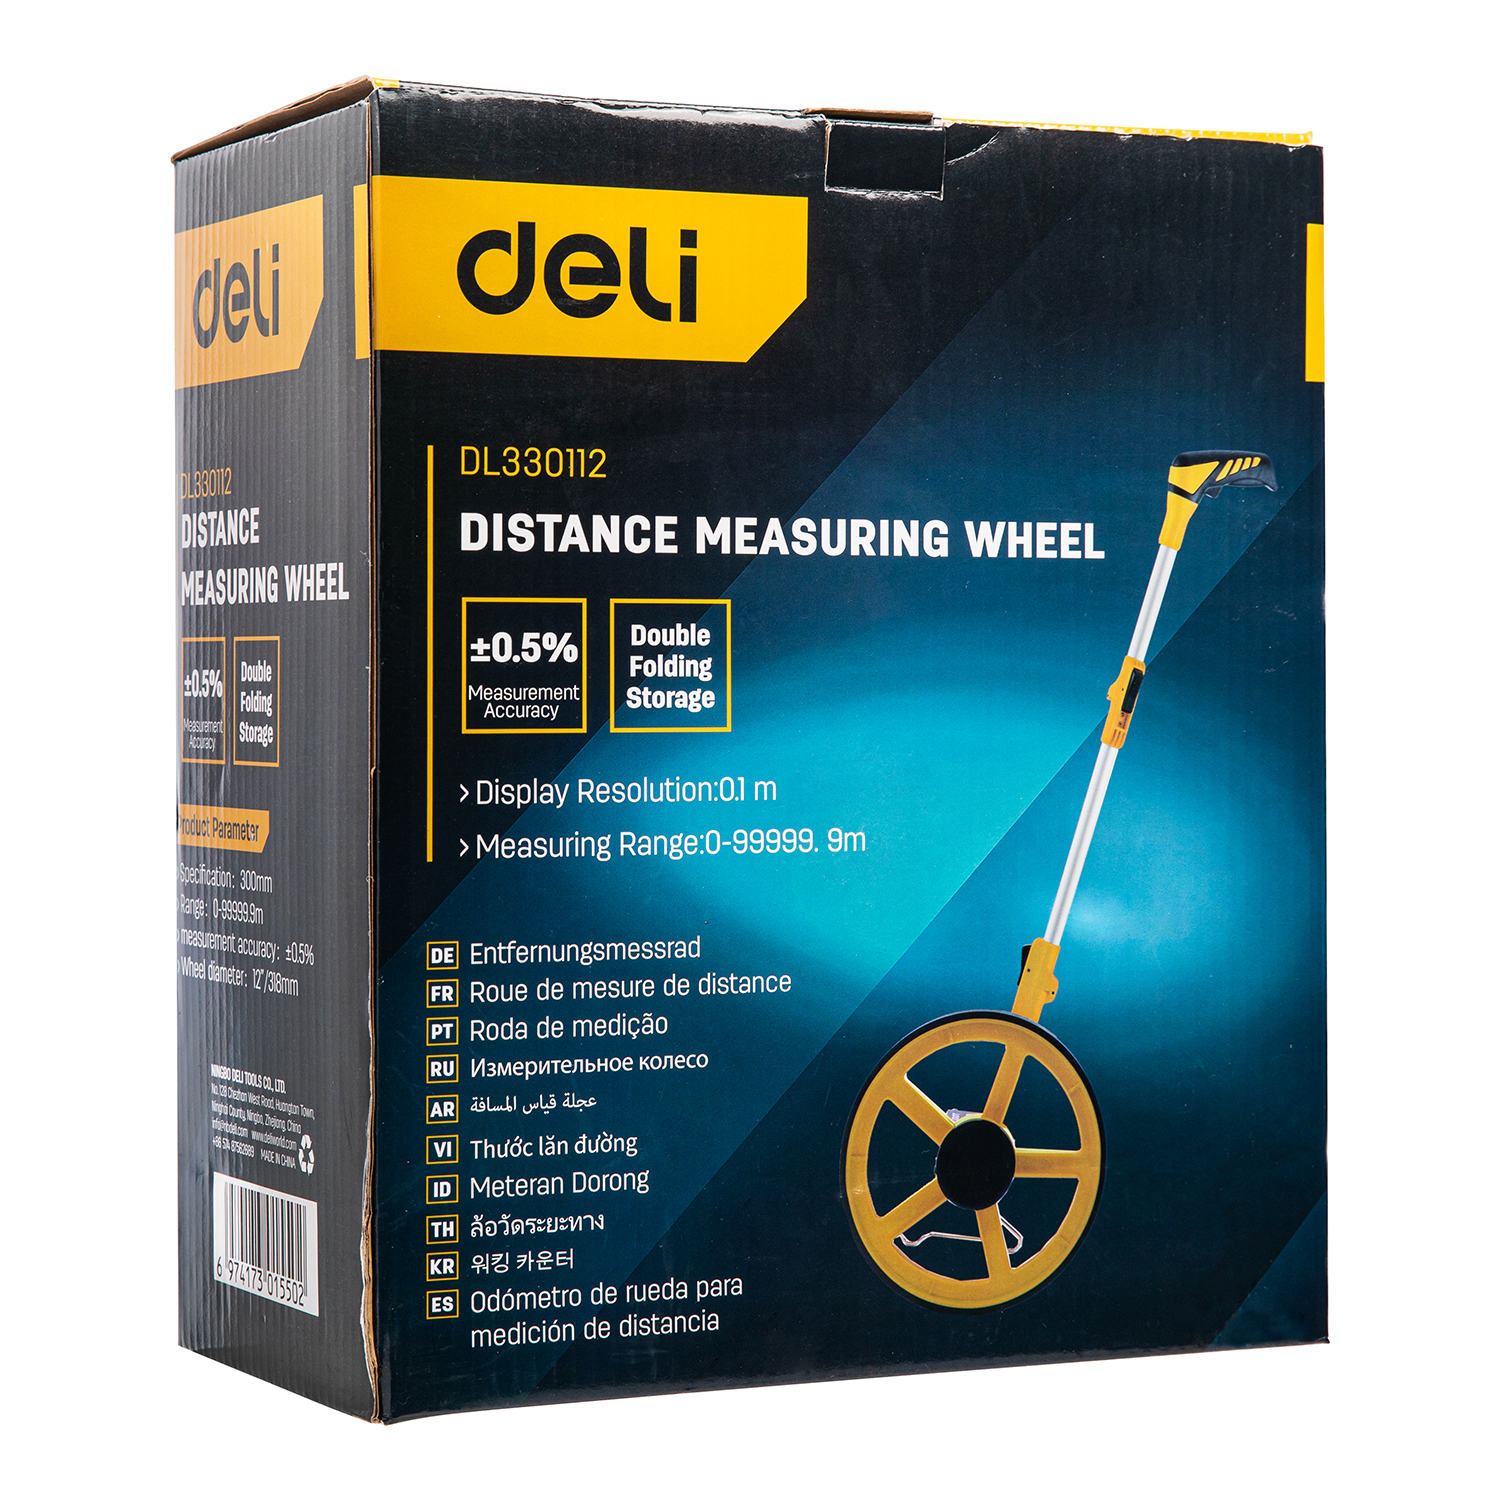 Digital folding Distance Measuring Wheel for land measuring